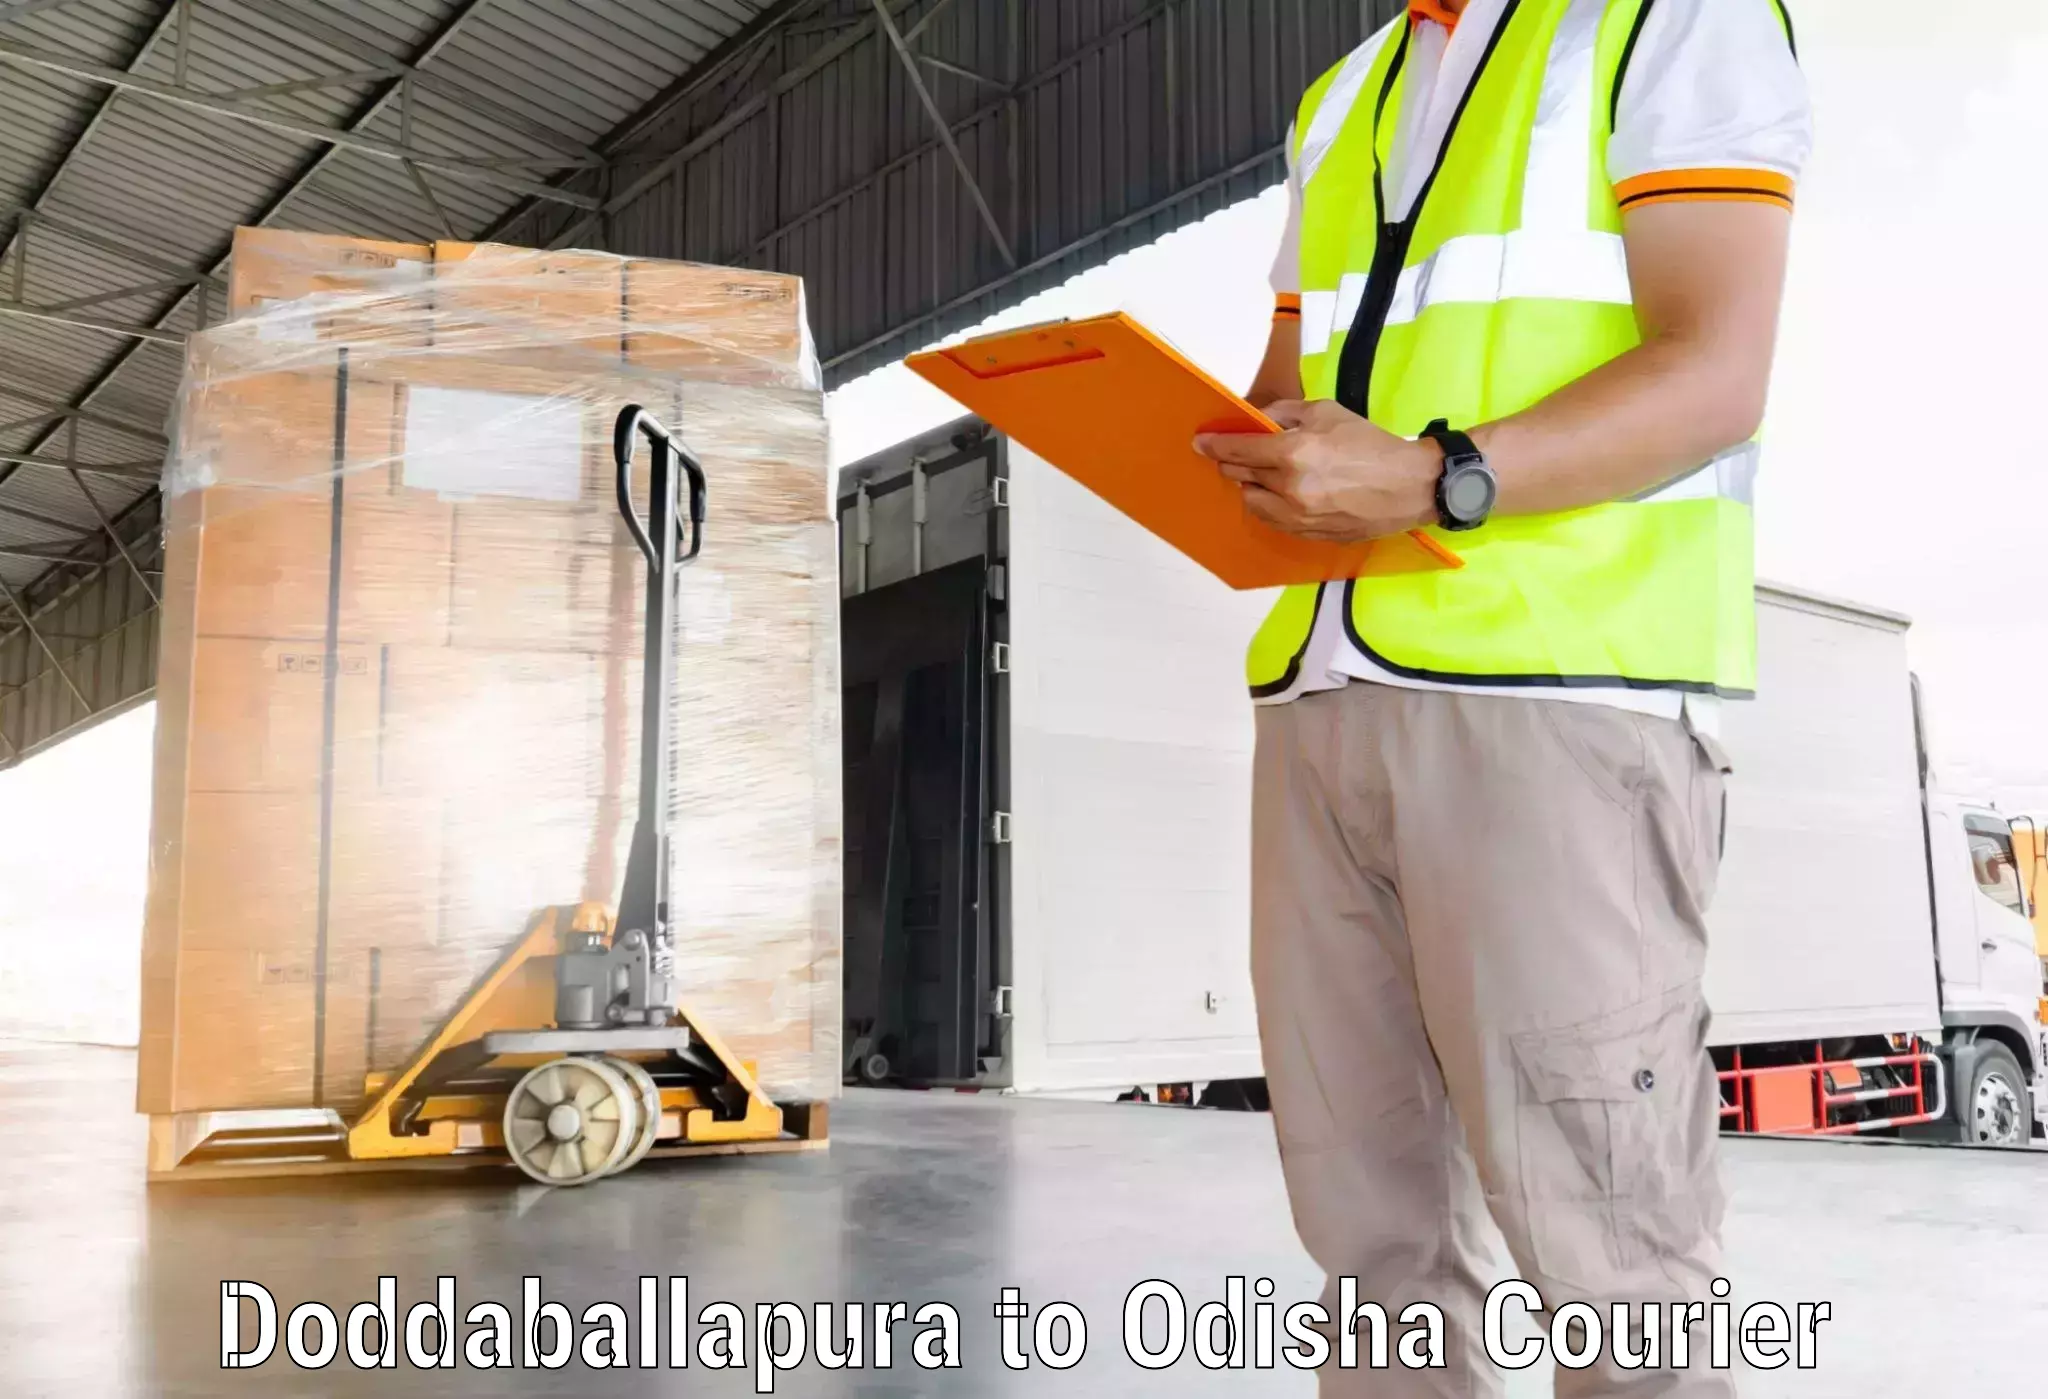 Same-day delivery solutions Doddaballapura to Udala